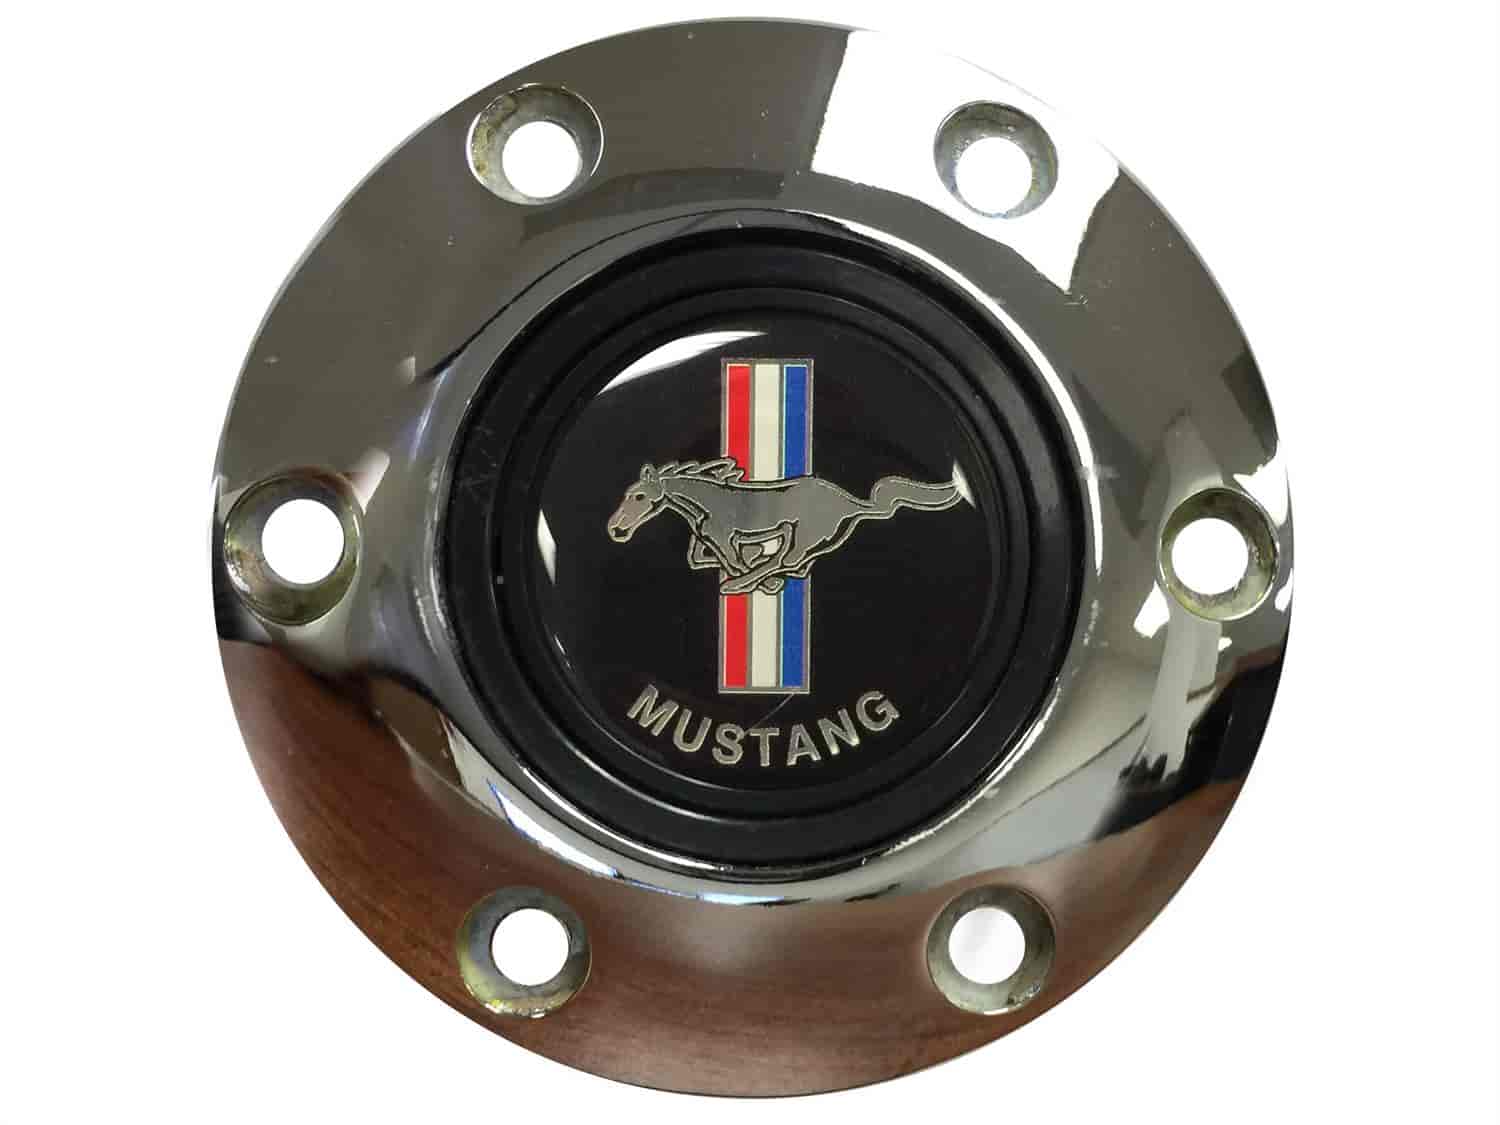 S6 Horn Button Cap Ford Mustang Running Pony Emblem